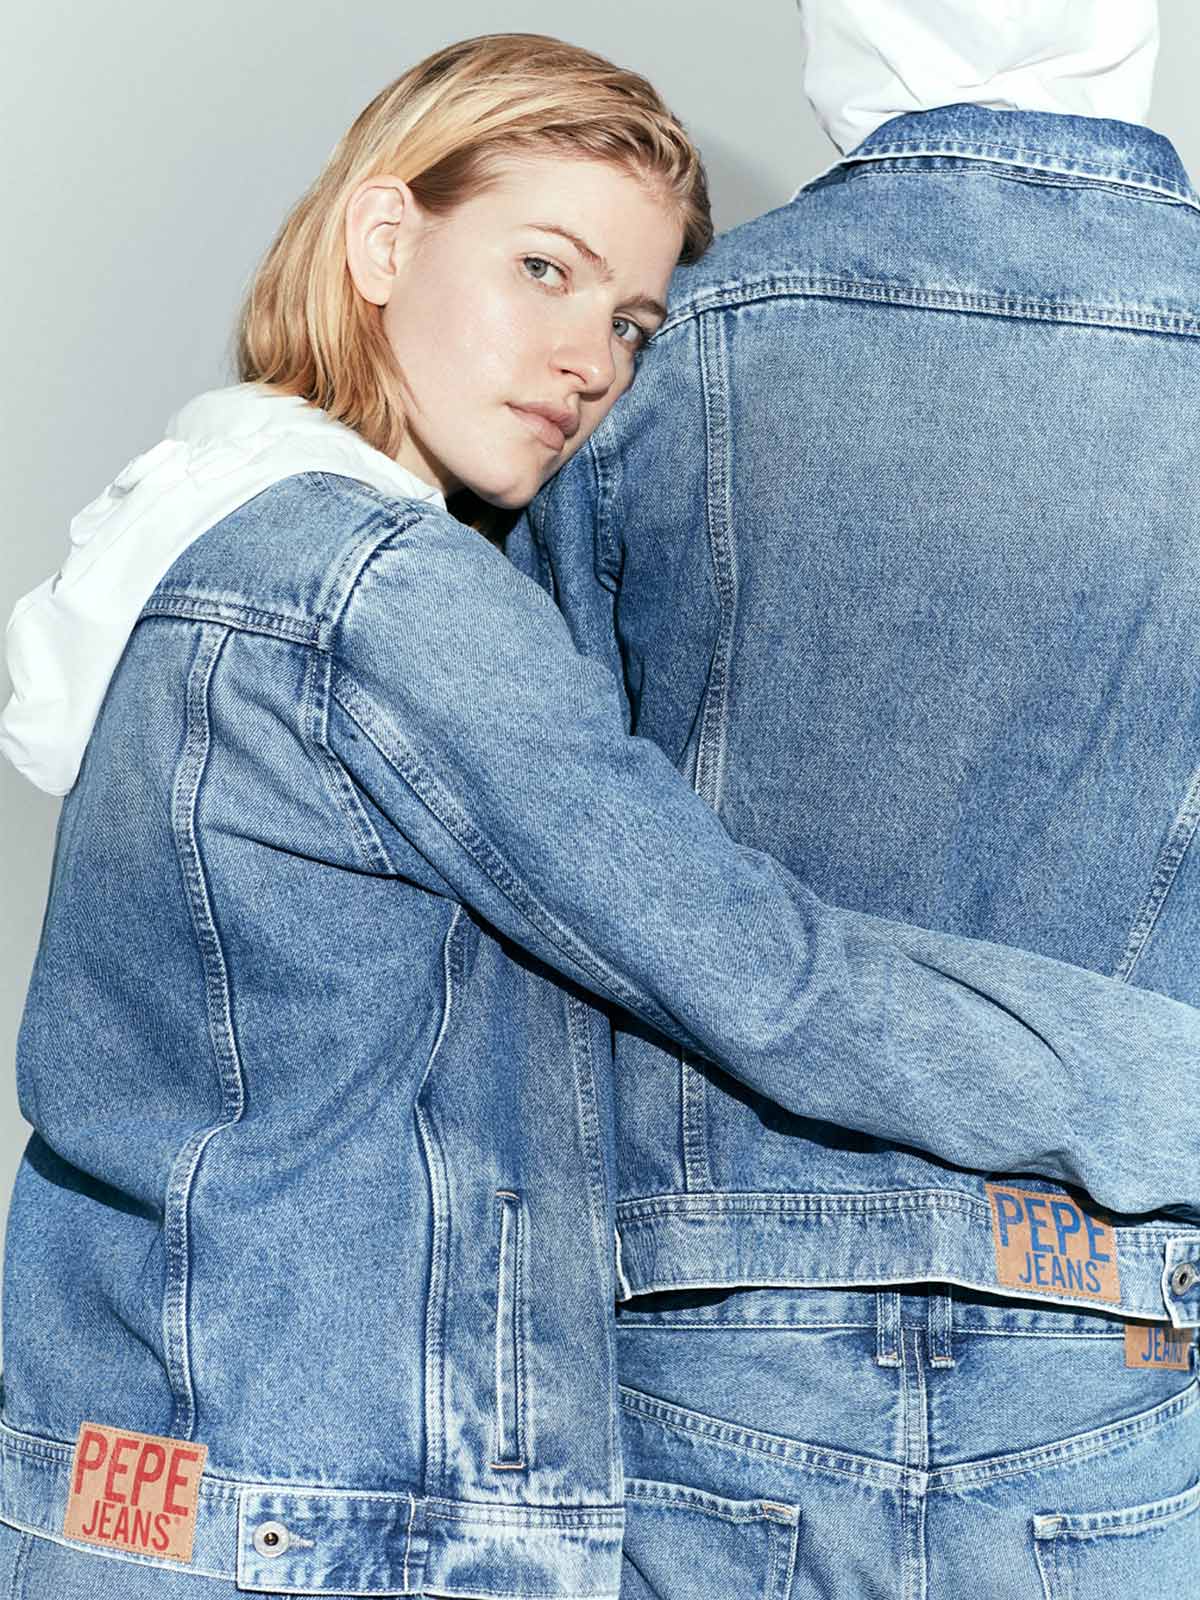 pepe jeans true blue Off 77% - www.loverethymno.com